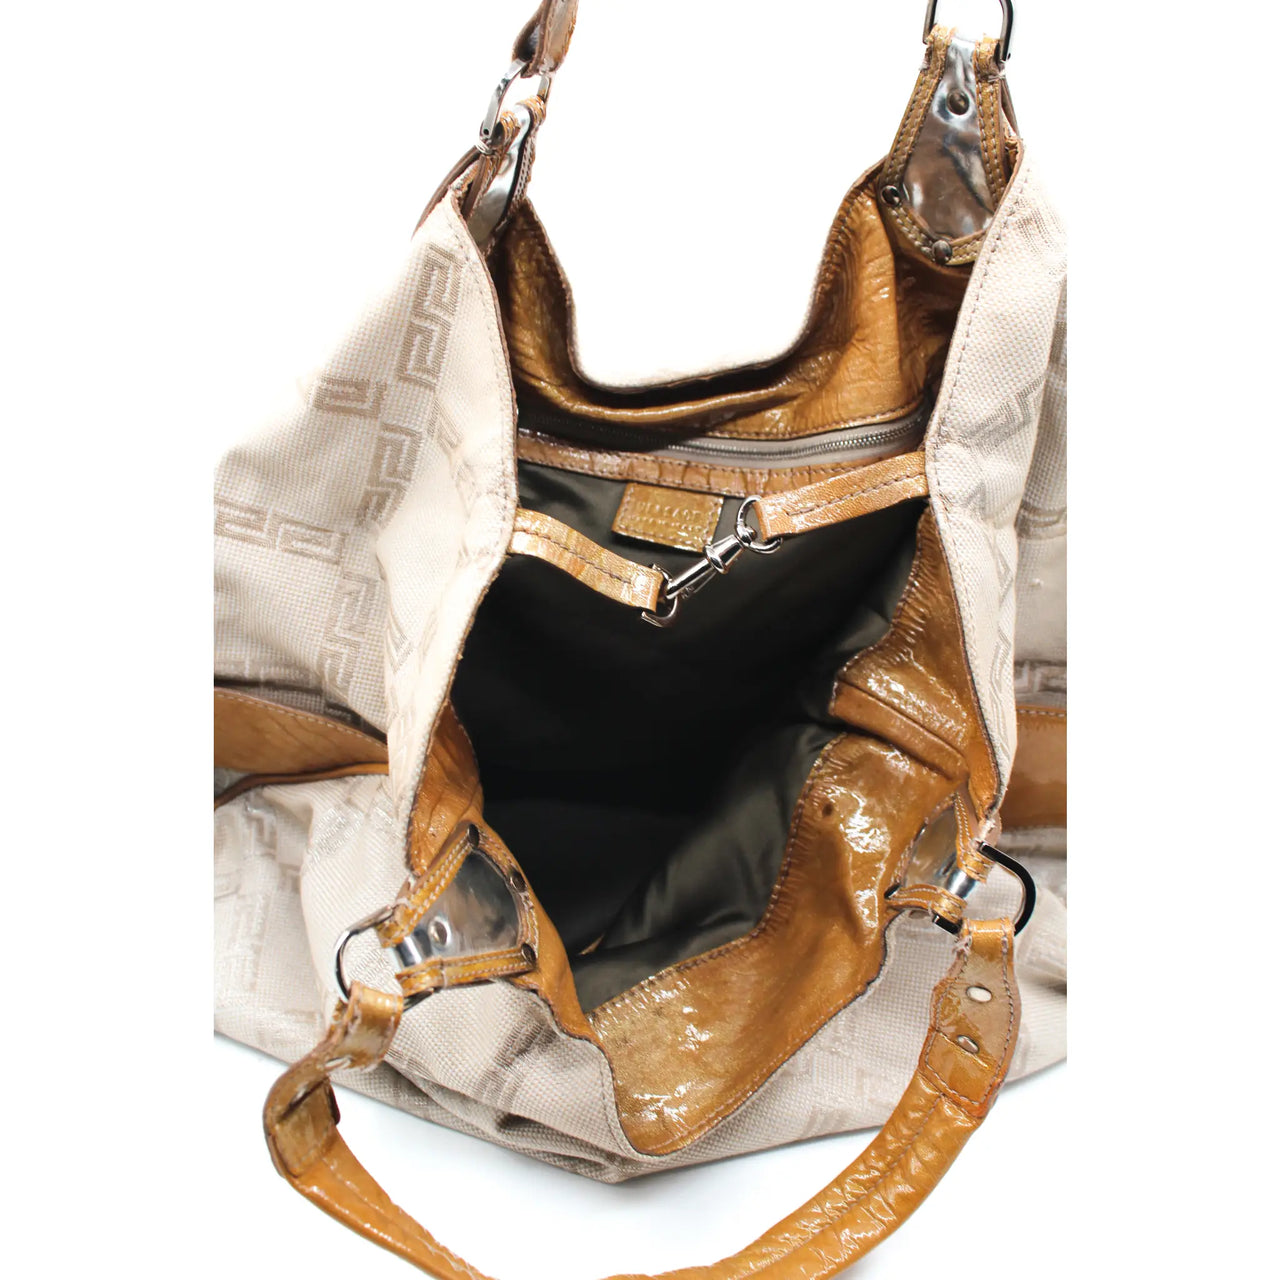 Versace Authenticated Leather Handbag